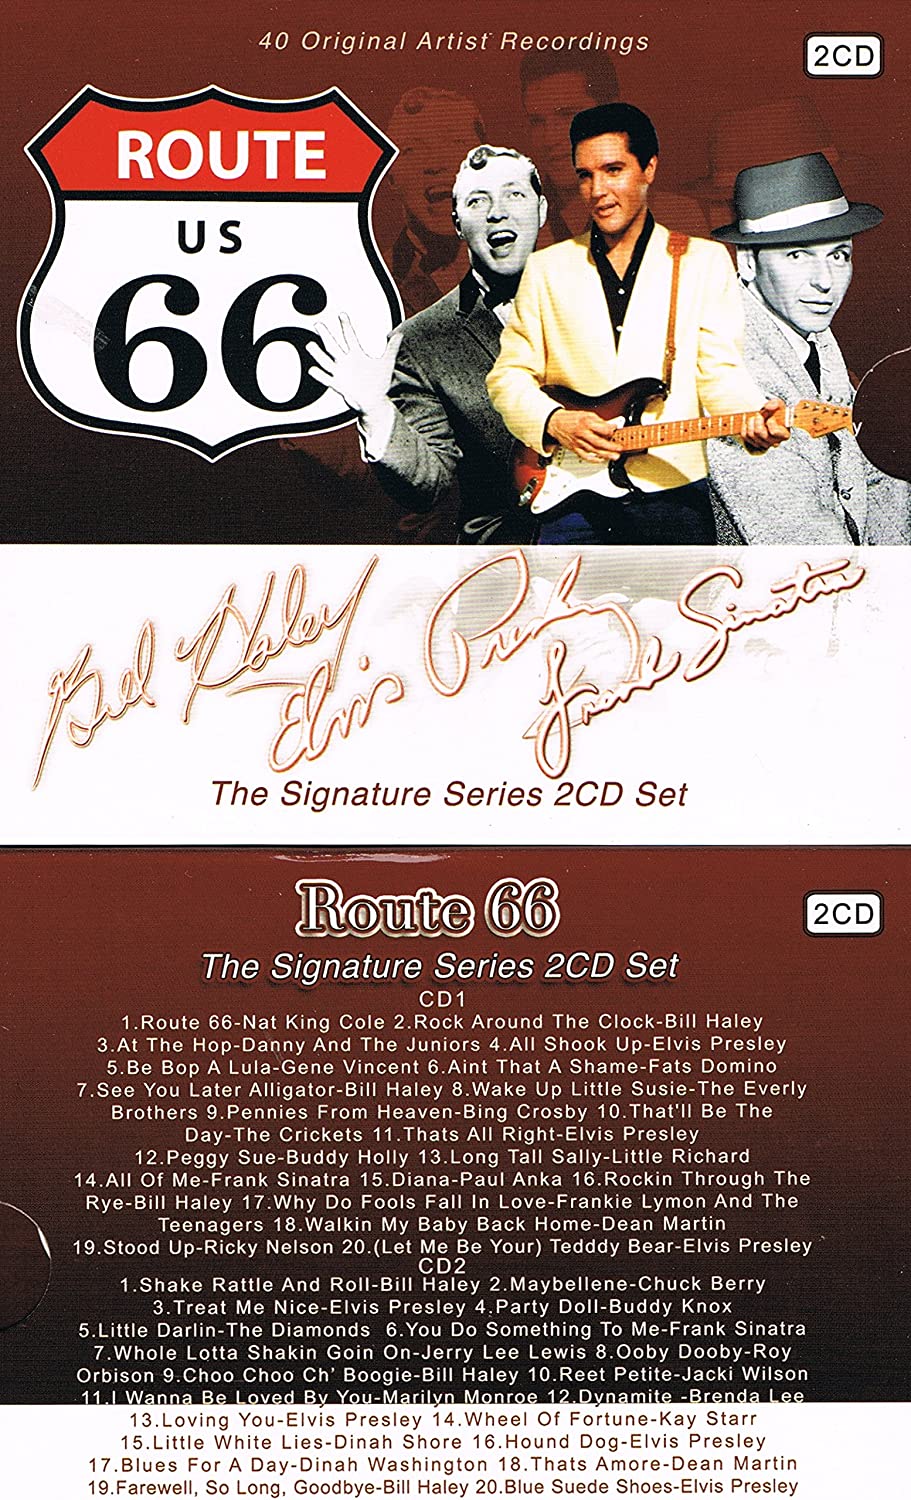 ROUTE 66 - 40 Original Artists Recordings (Signature Series 2CD Set) [Audio CD] Various Artists